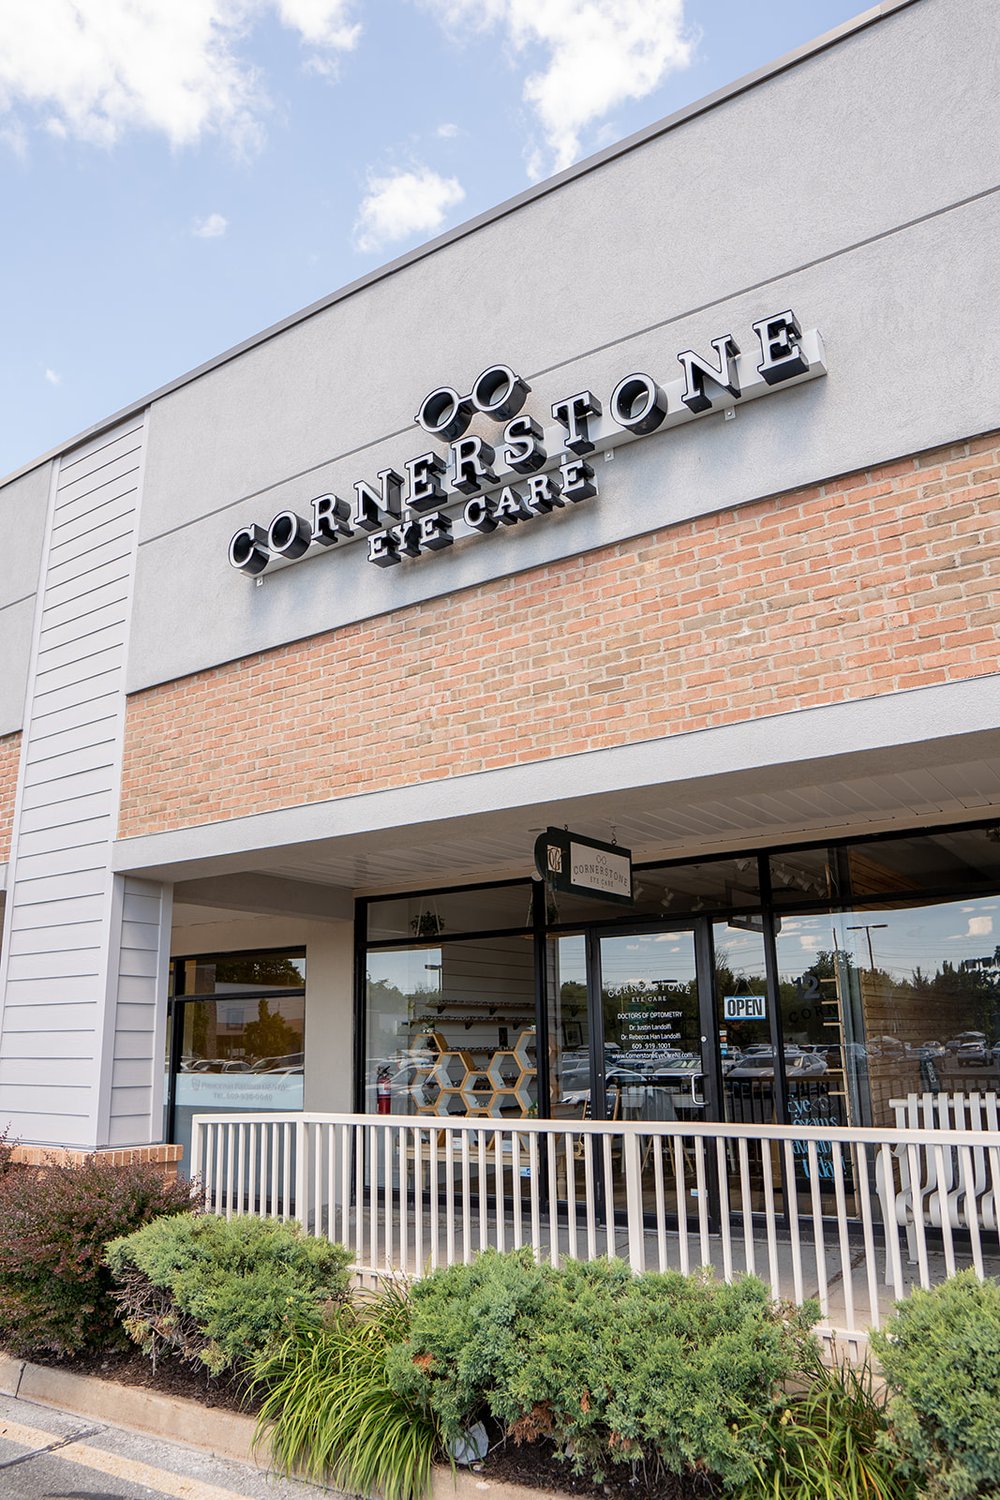 Cornerstone Eye Care: Dr. Landolfi a Princeton Eye Doctor — Cornerstone Eye  Care - Princeton New Jersey near West Windsor and Plainsboro New Jersey